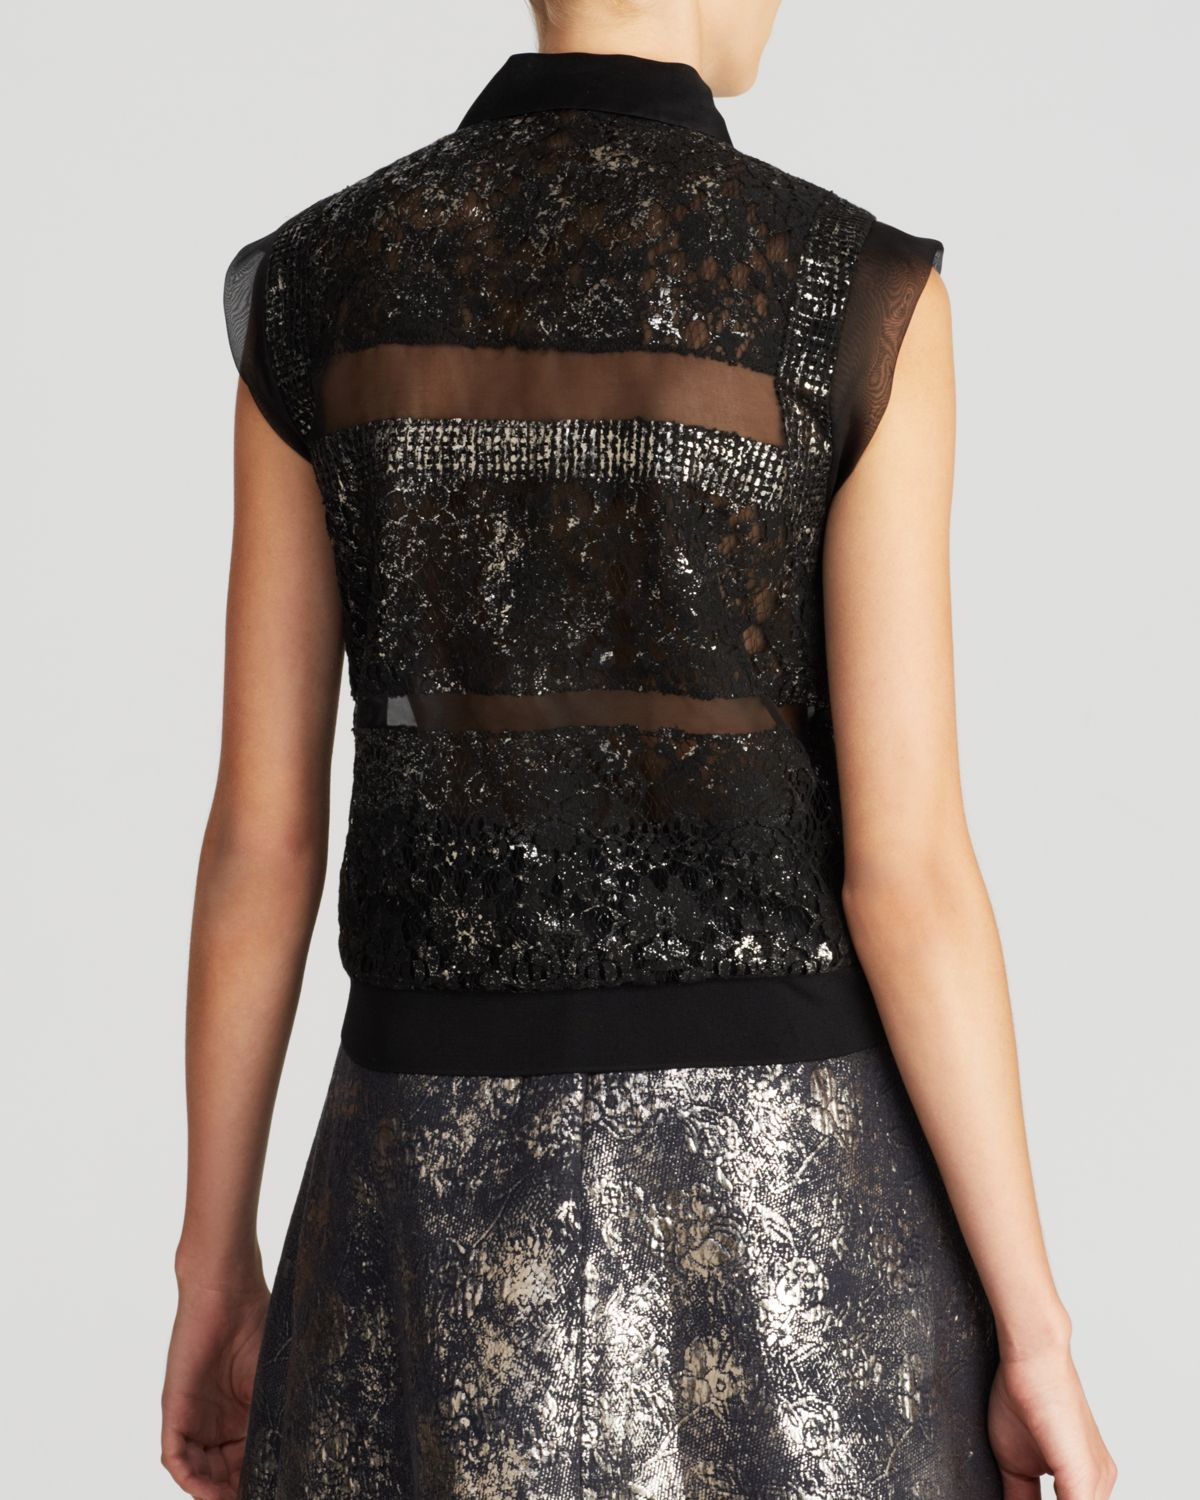 rebecca-taylor-black-top-sleeveless-foil-lace-yardage-printing-hannah-schultz.jpg